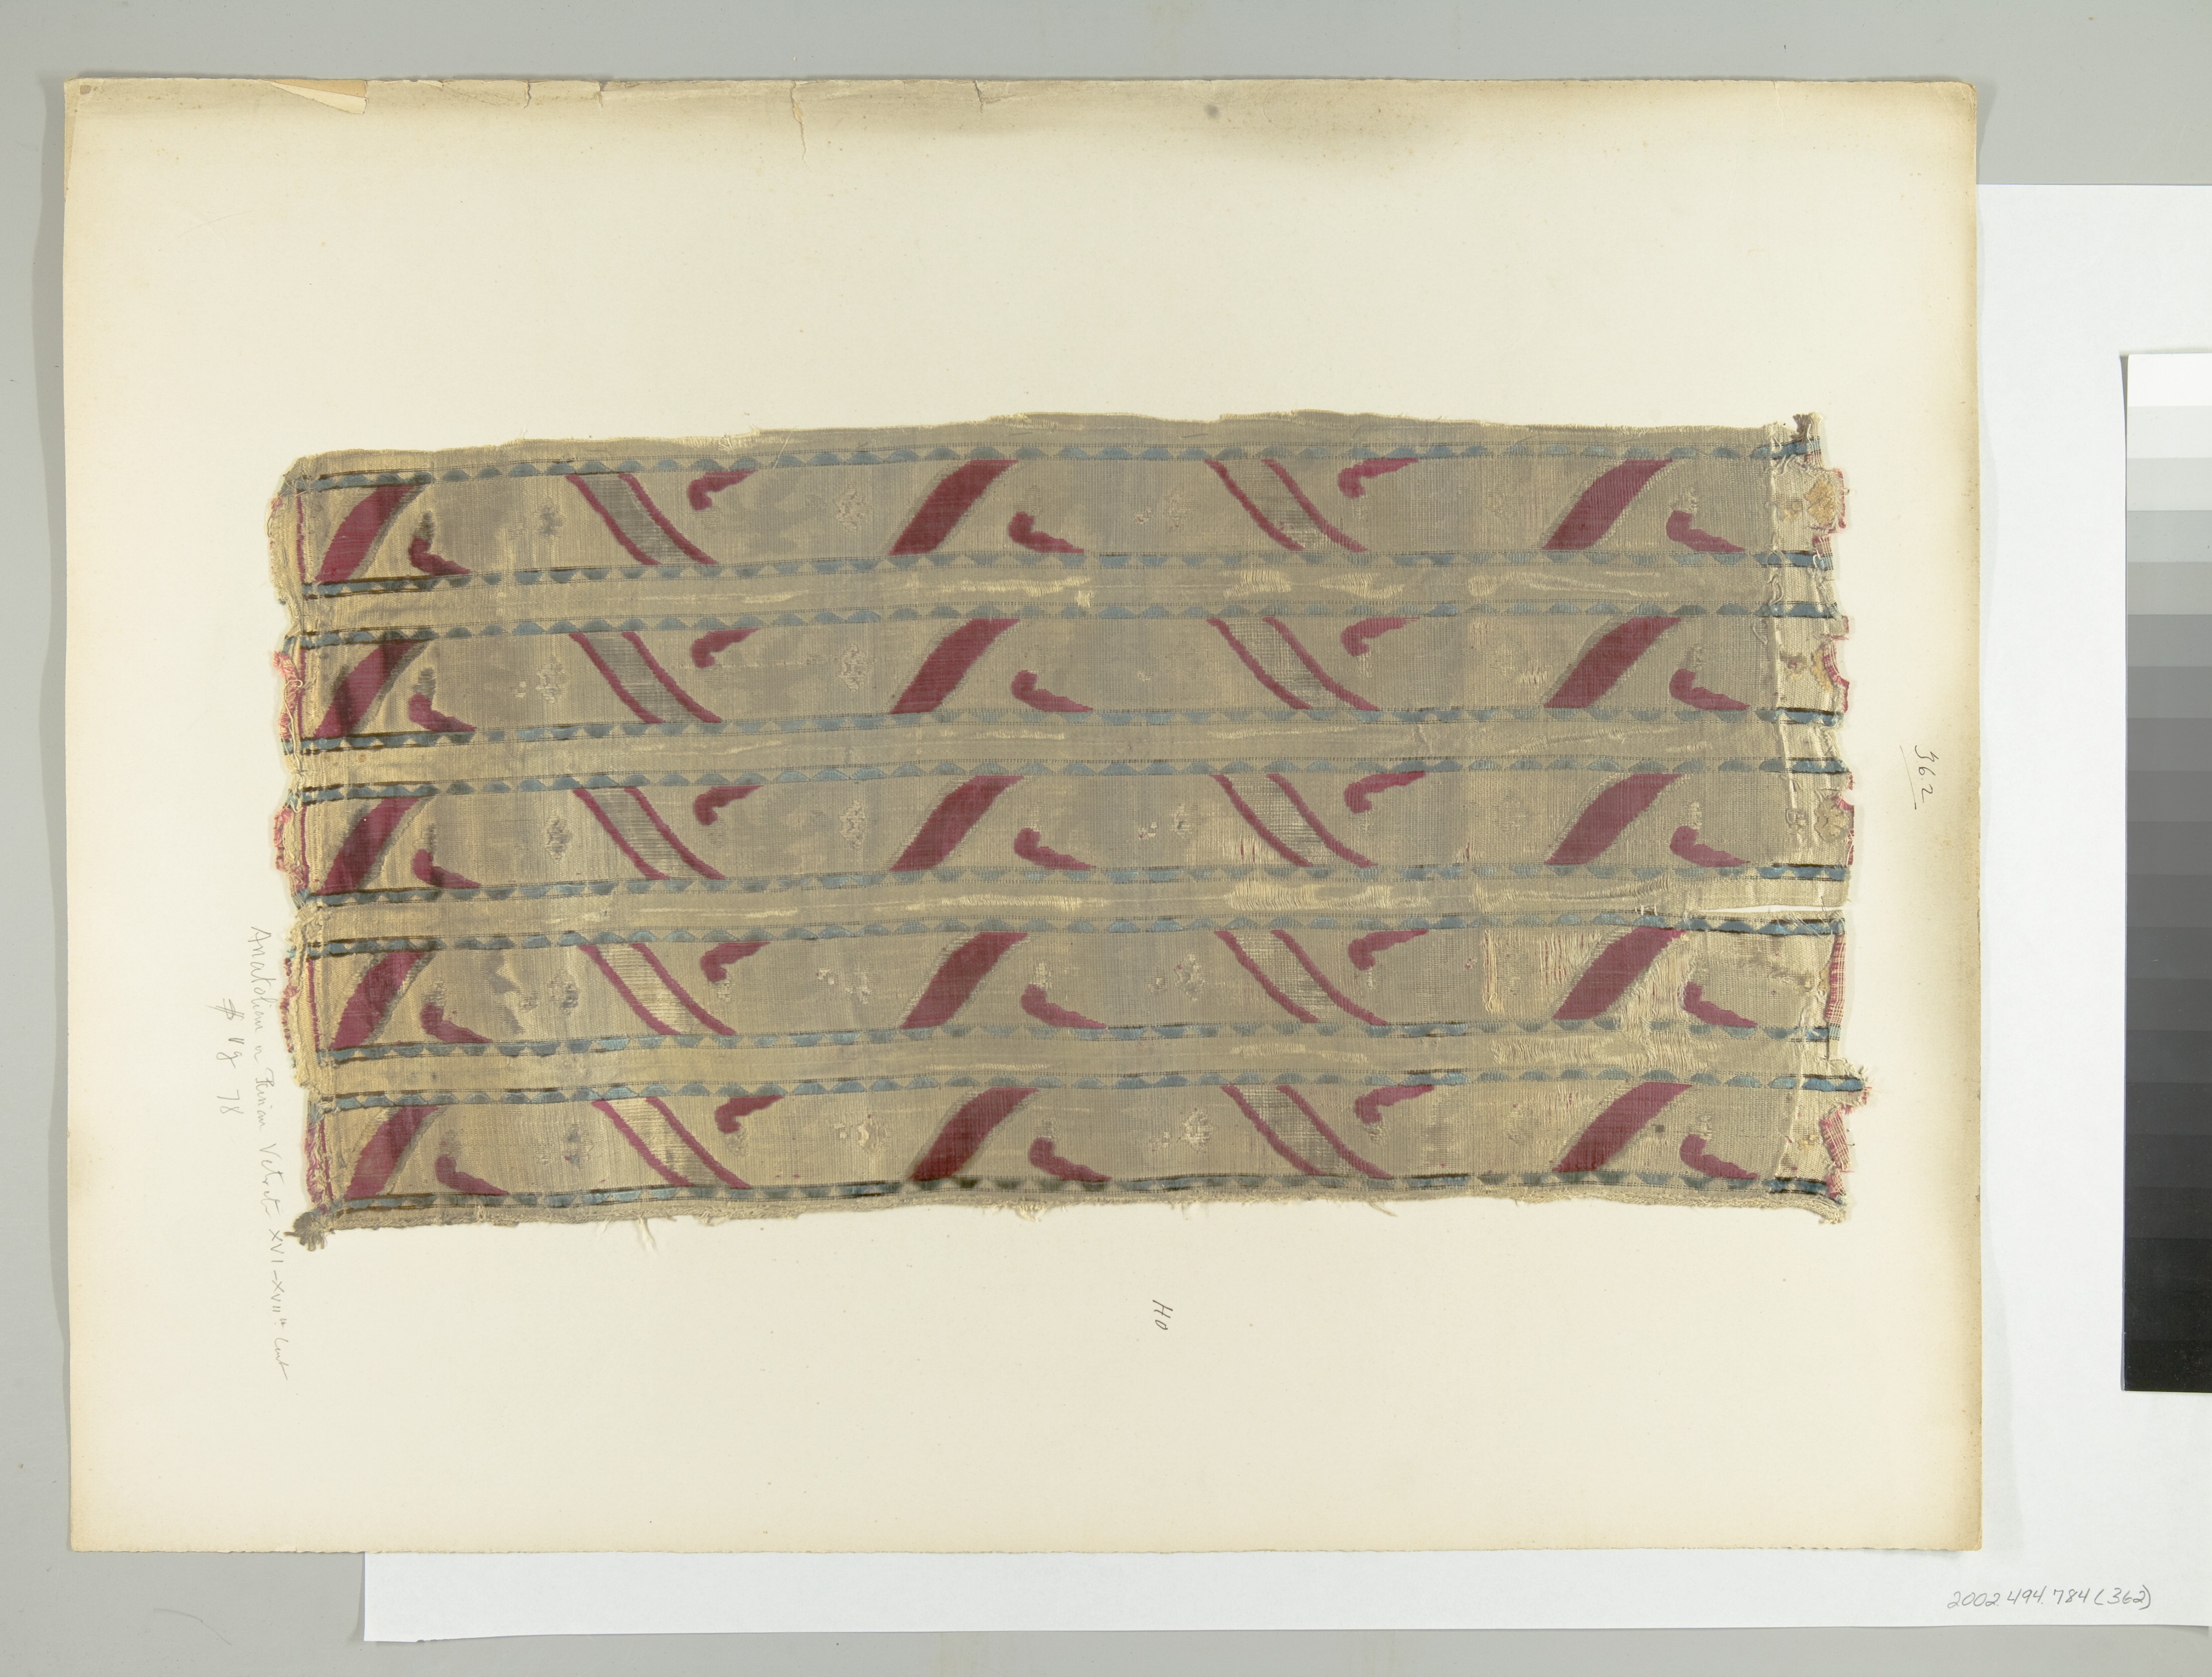 Textile Fragment | The Metropolitan Museum of Art